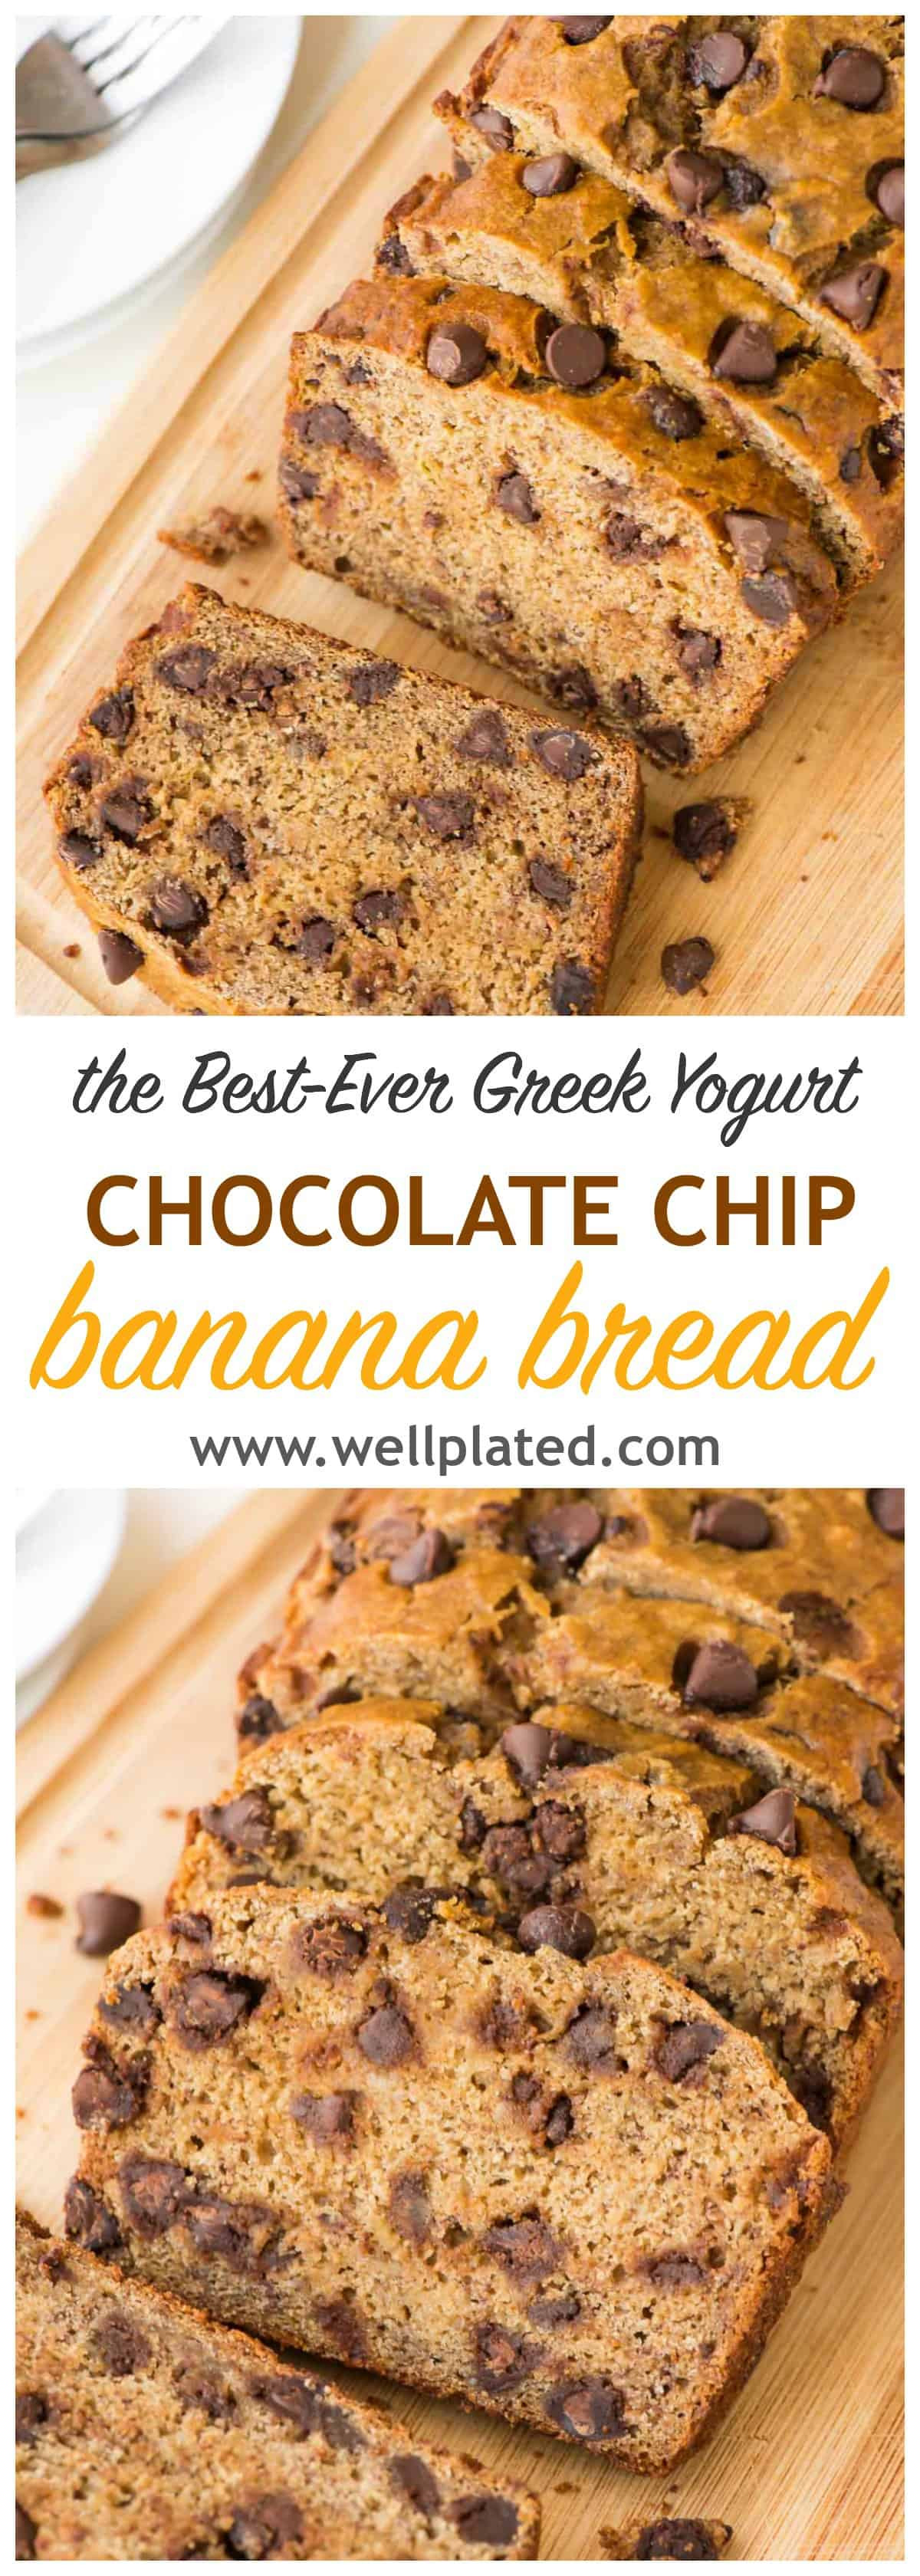 Is Banana Bread Healthy
 Healthy Banana Bread Recipe with Chocolate Chips